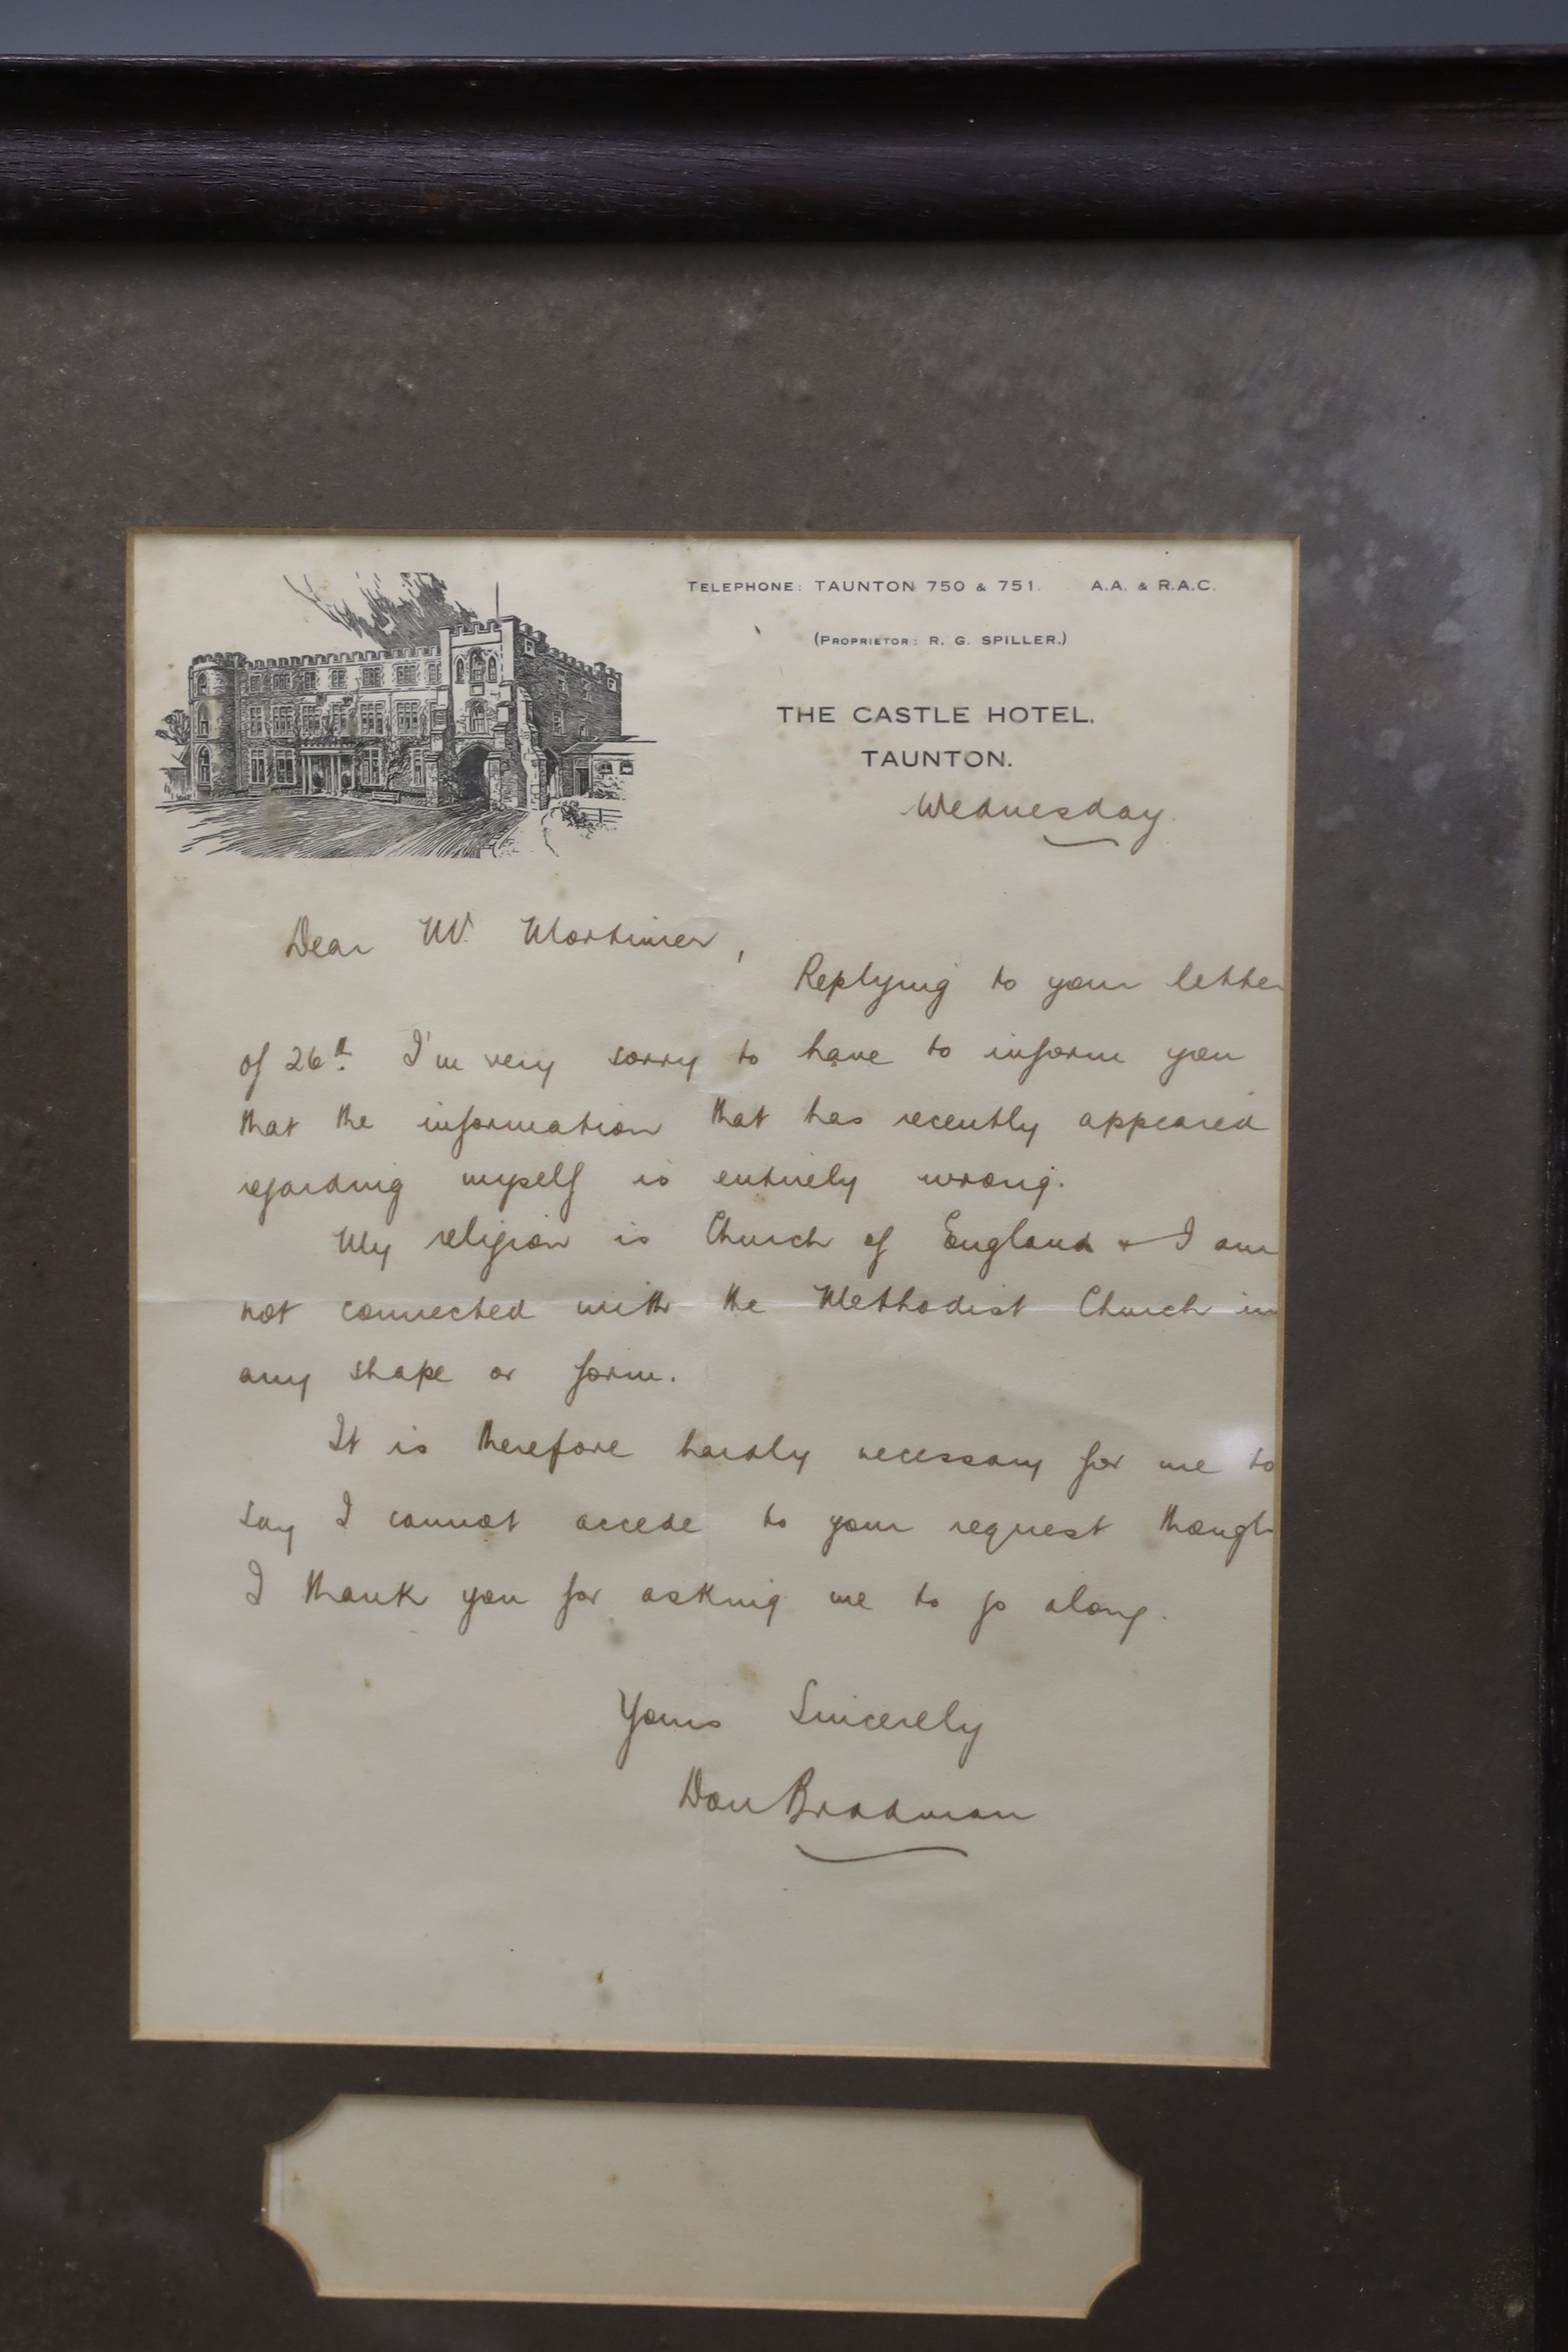 A signed letter written by Sir Don Bradman regarding his religion, framed